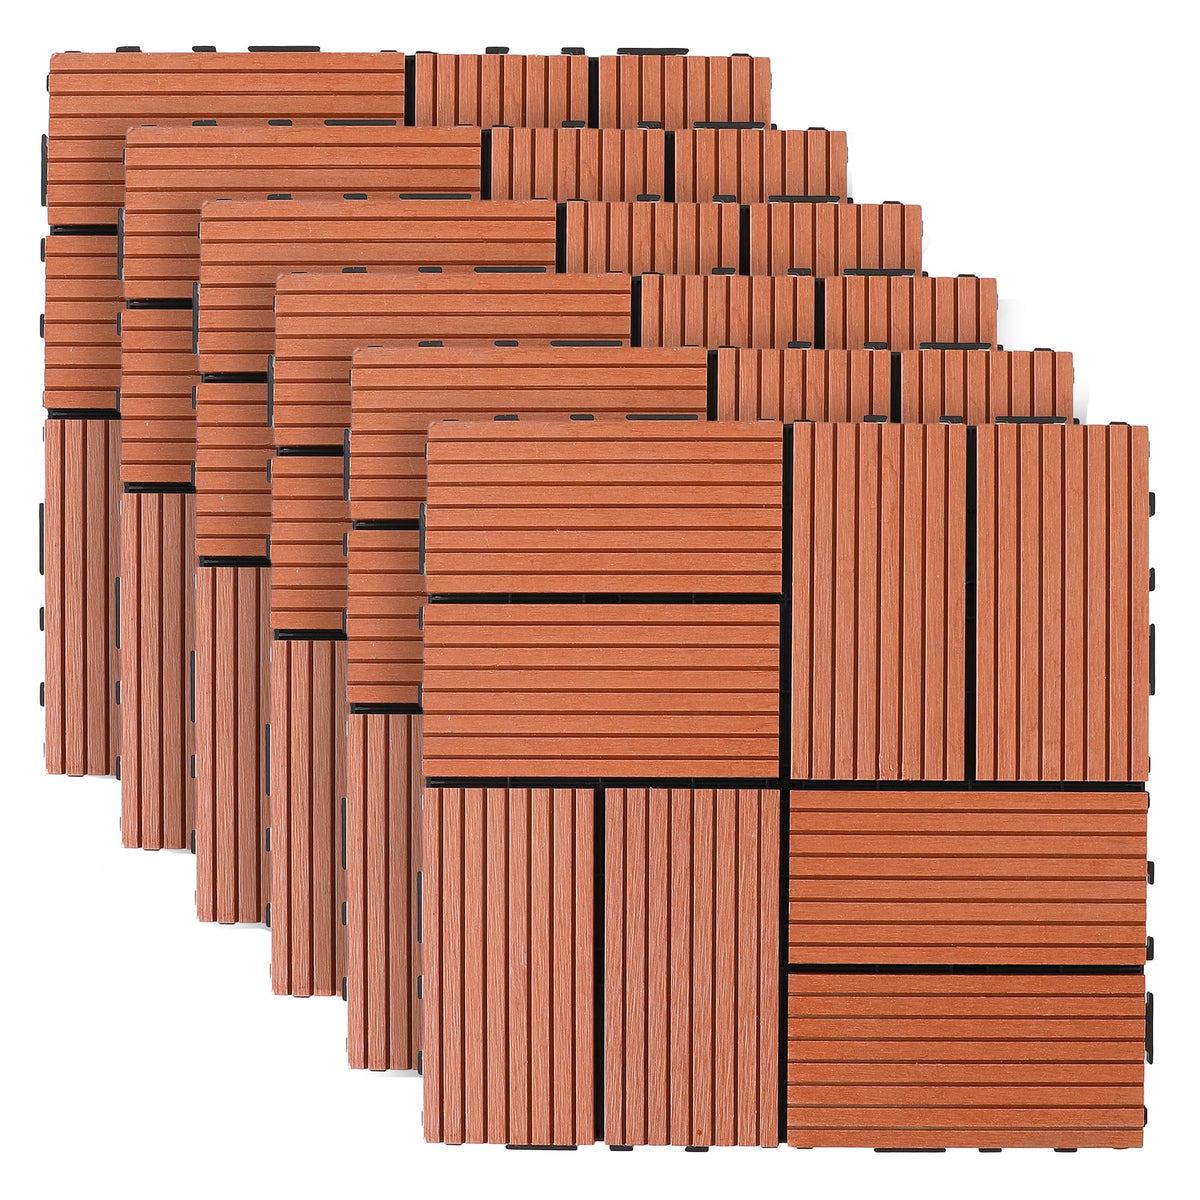 Cheston Interlocking Tiles I Wooden Floor Sheets I Interlocking Tiles for Indoor/Outdoor I Weather & Water Resistant I Flooring Solution I 12" X 12" Deck Tiles (Pack of 6, Wooden)